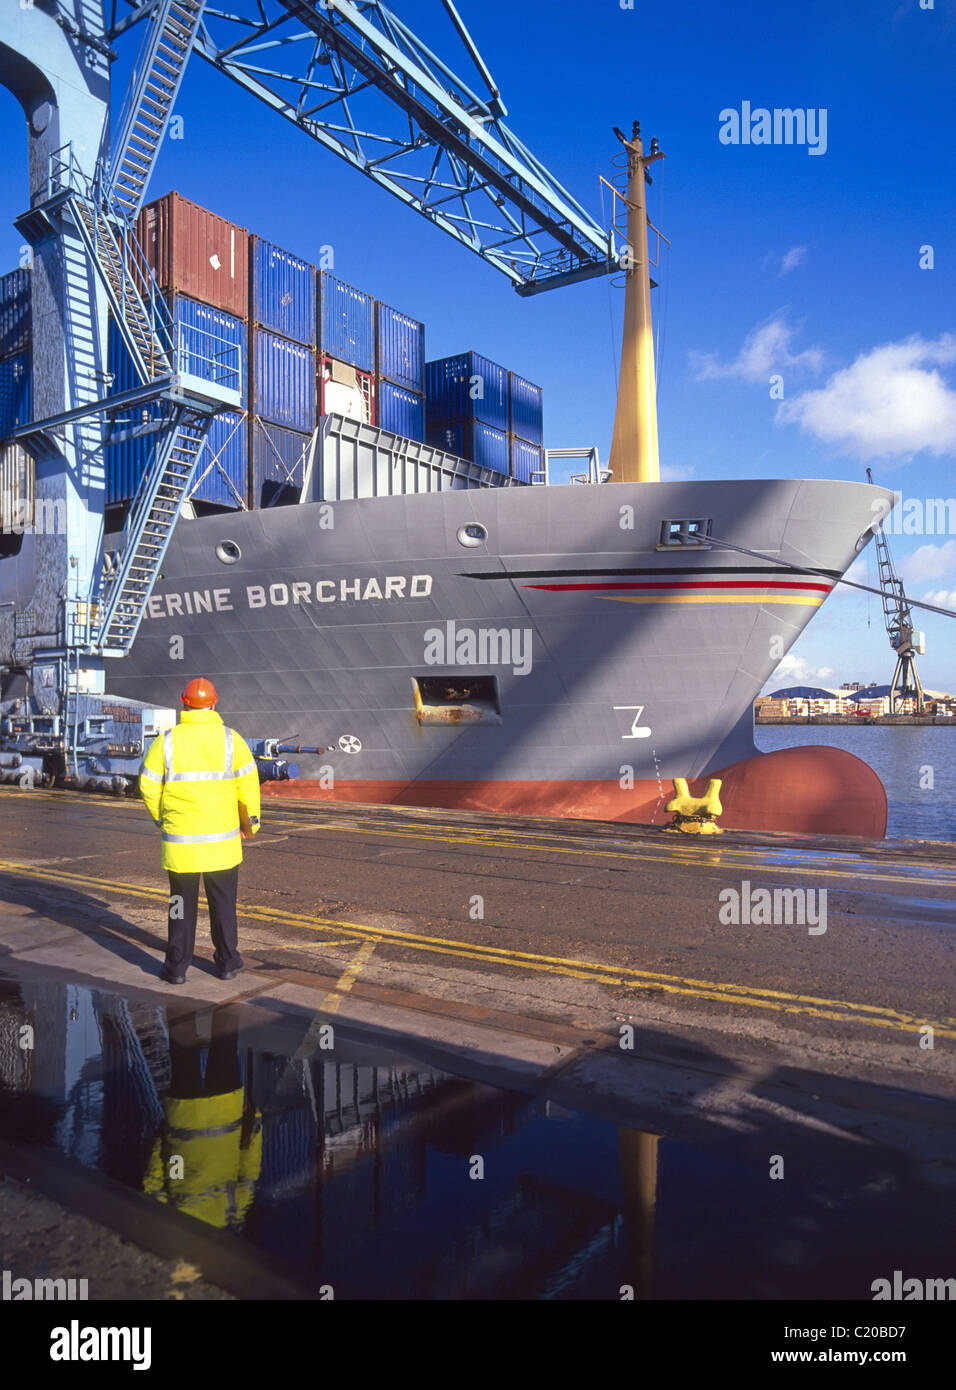 Dockside supervisor standing beside container ship Stock Photo